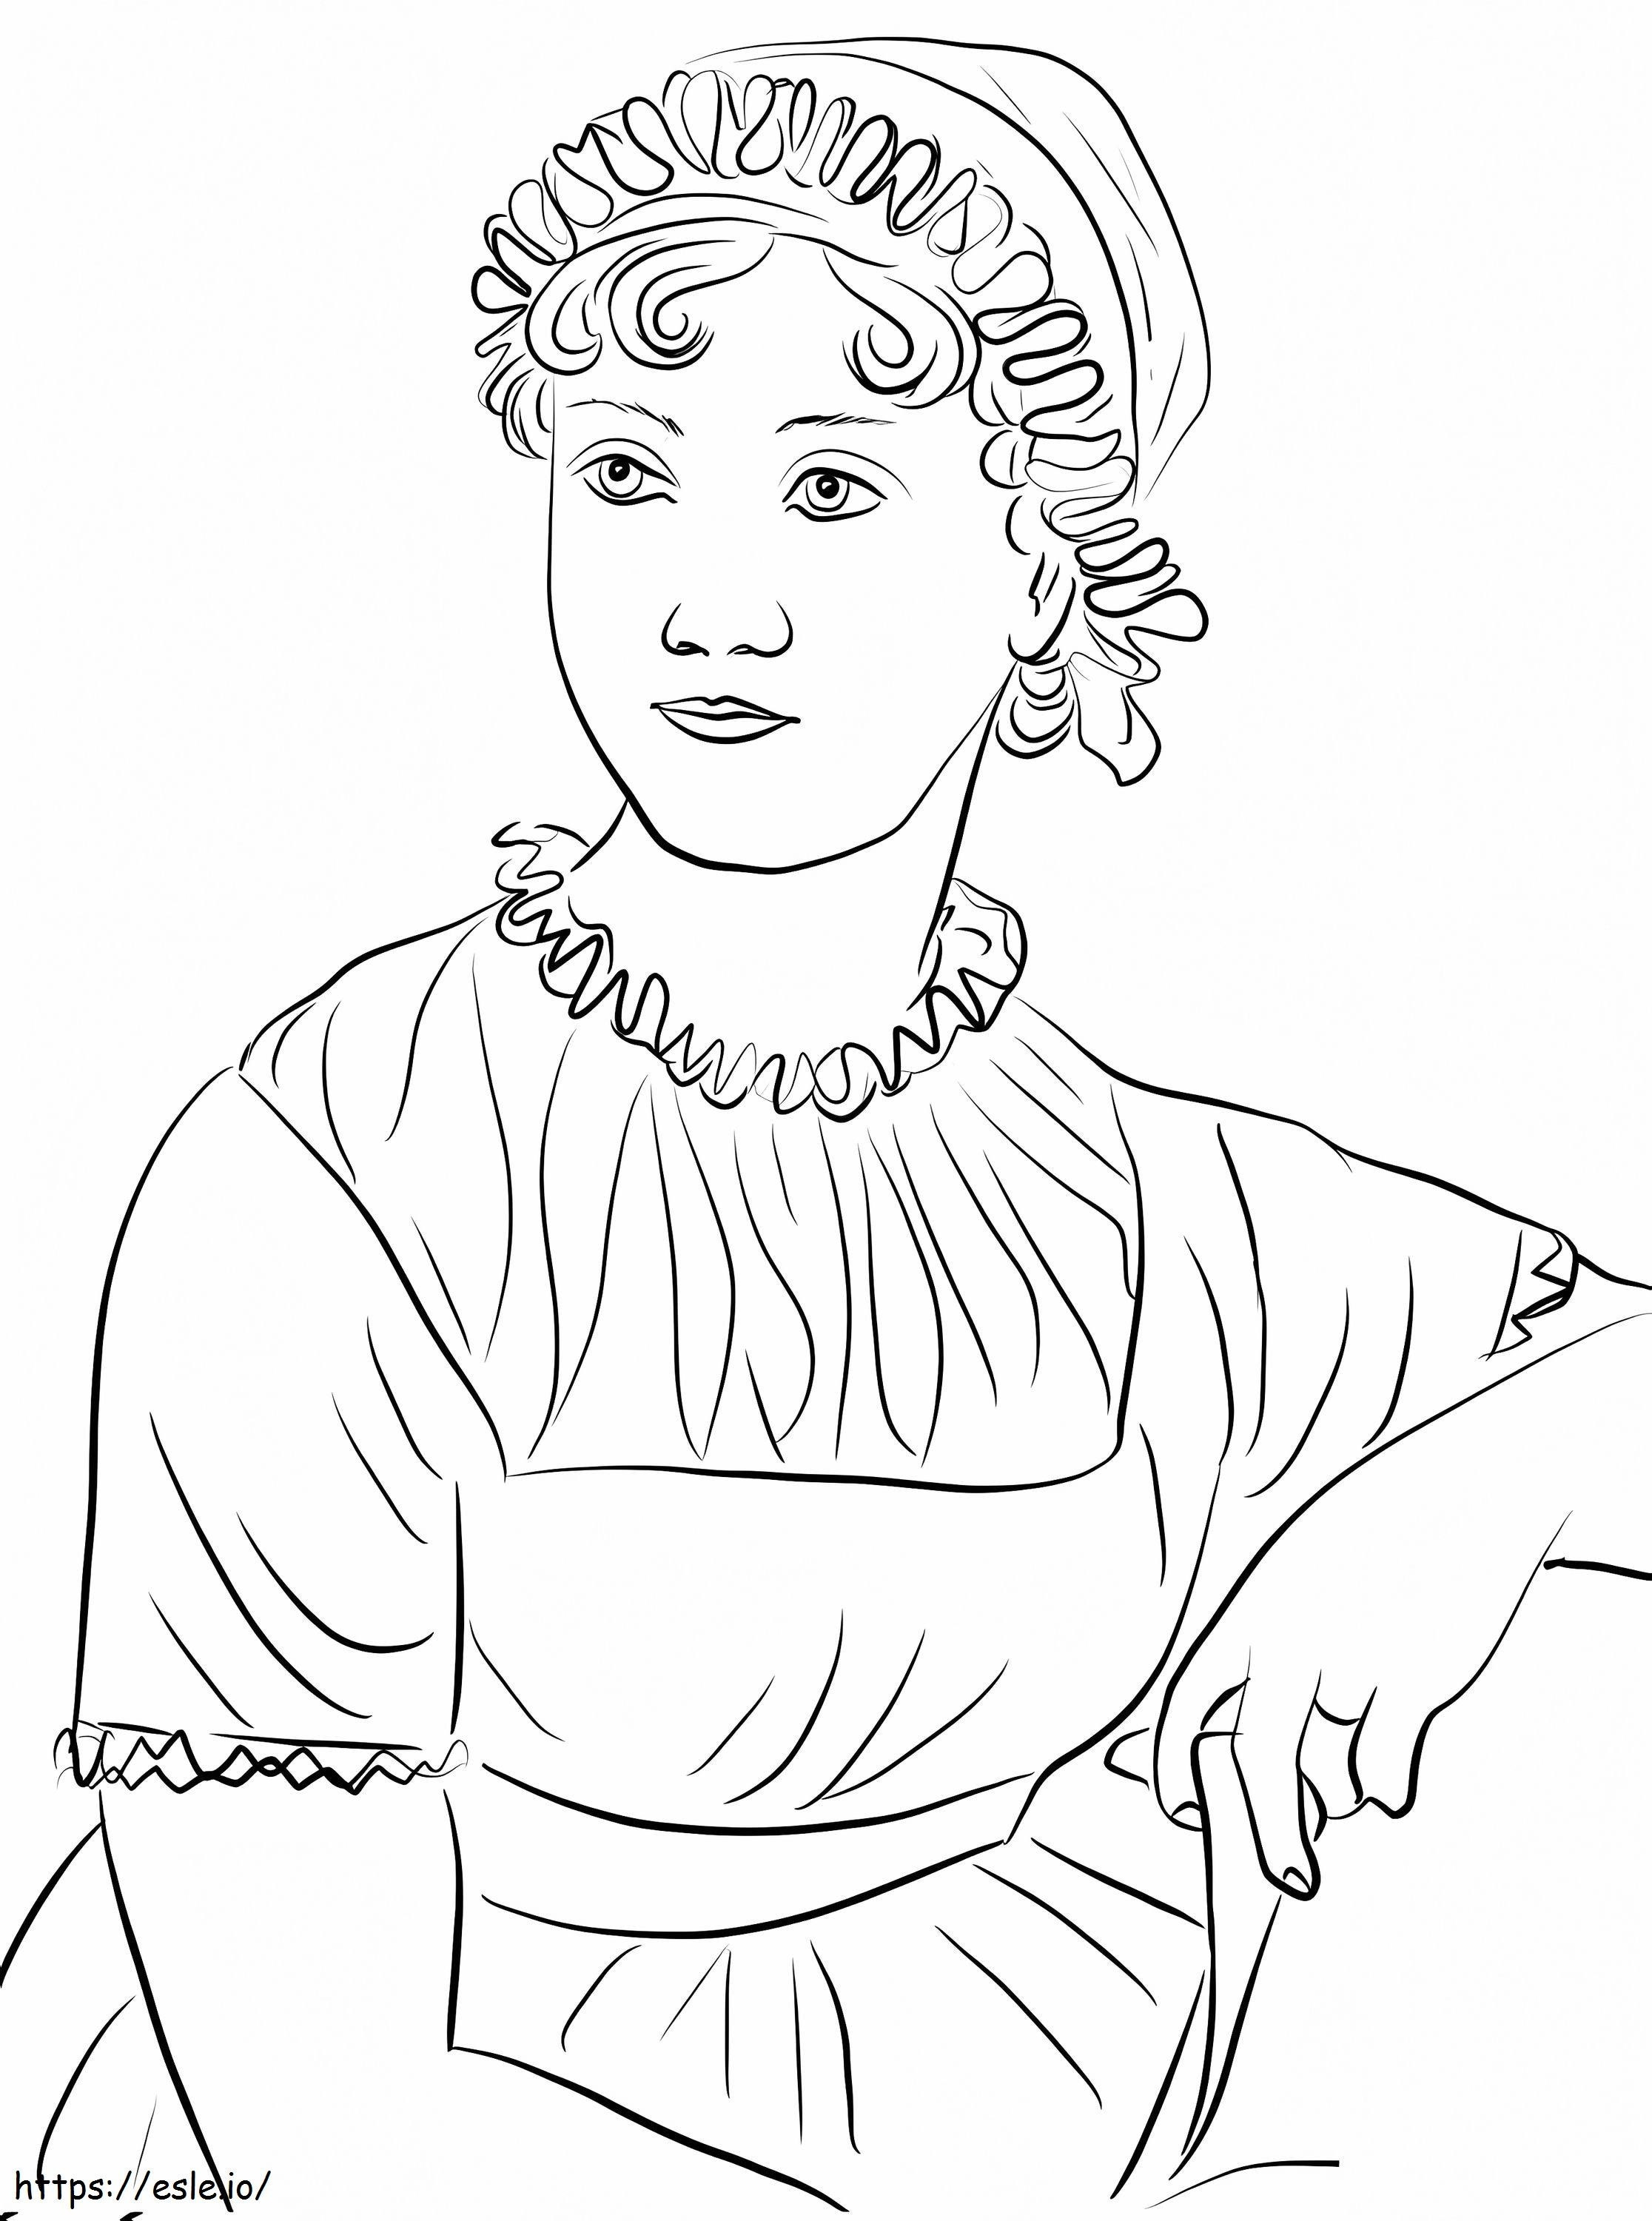 Jane Austen coloring page